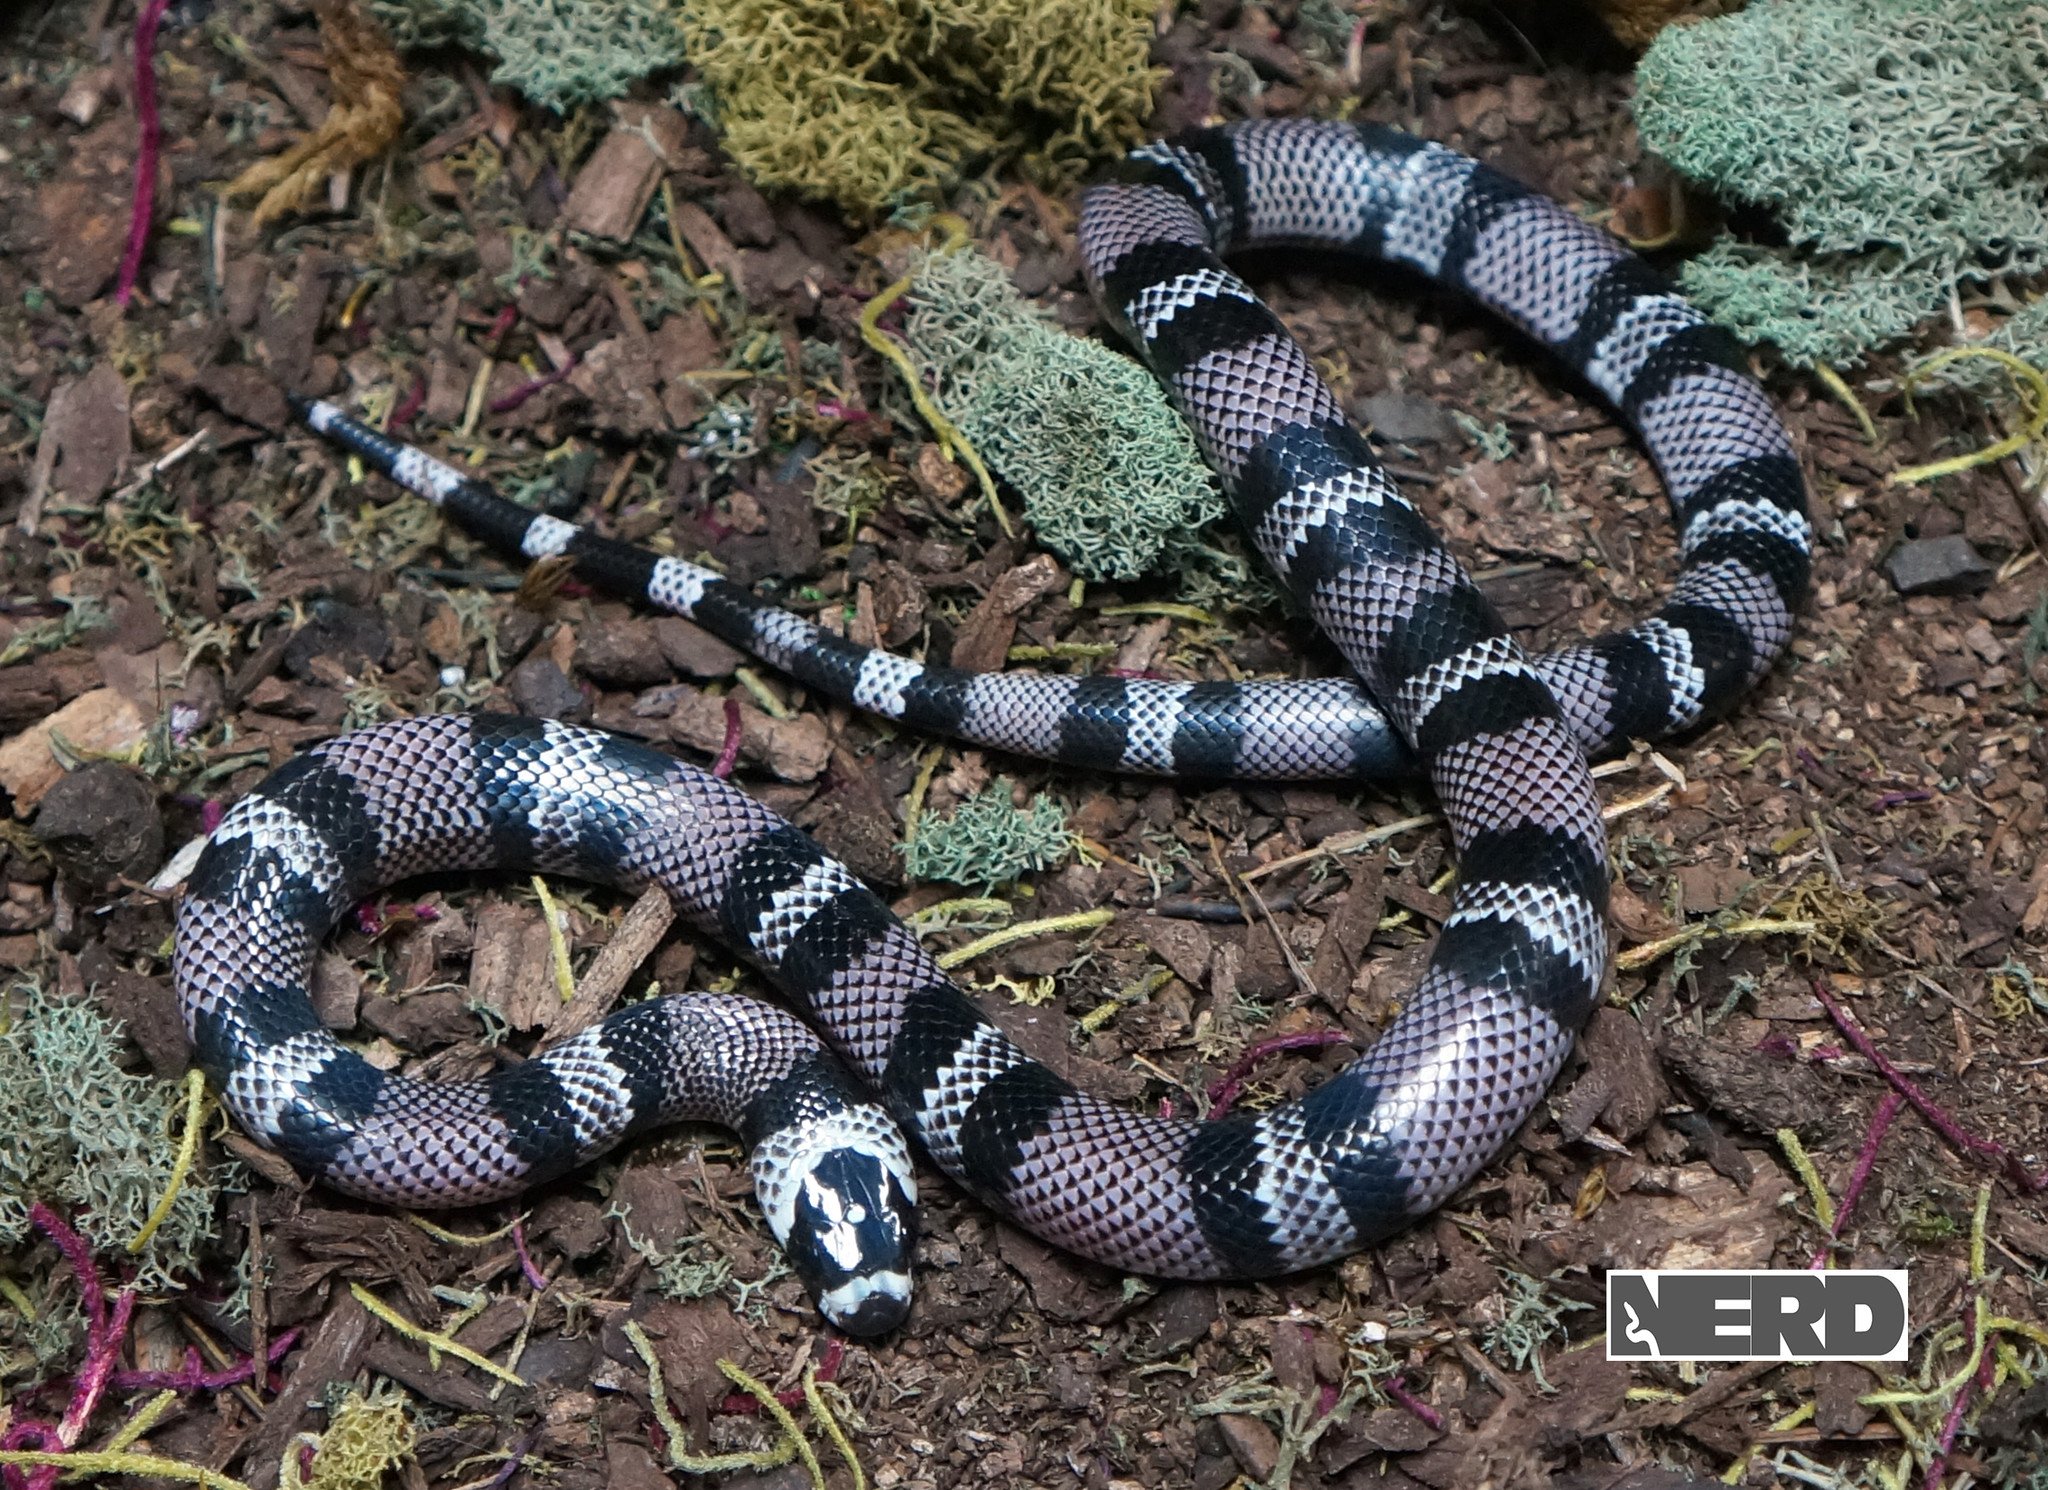 Anery Honduran Milk Snake by New England Reptile Distributors